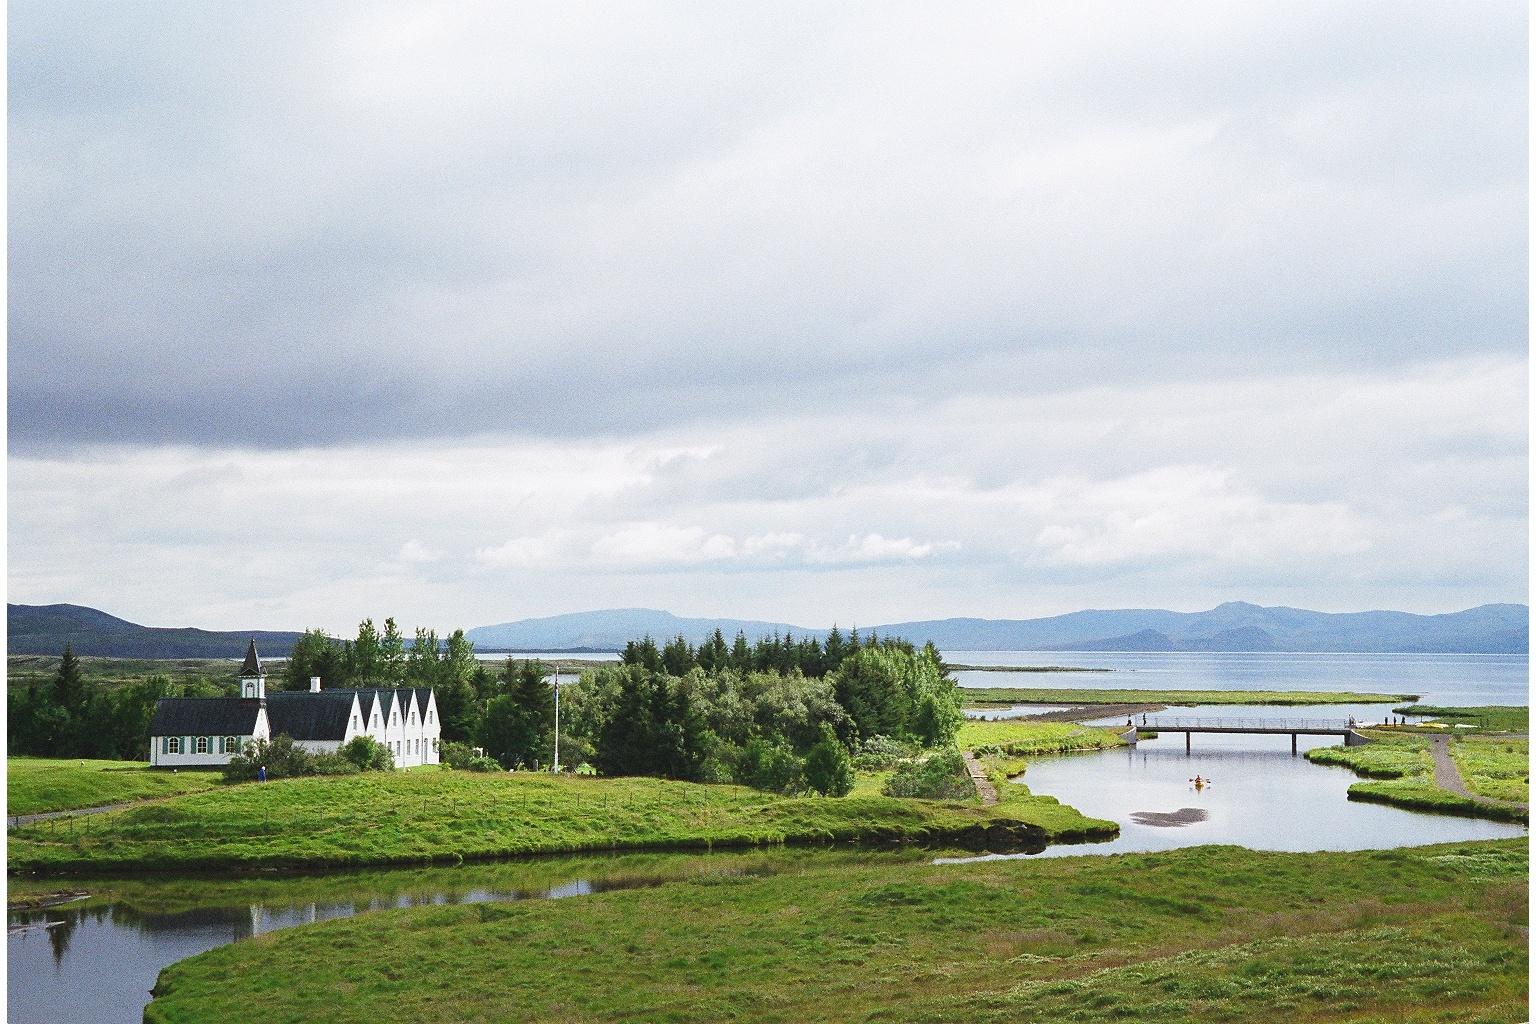 Iceland-Parliamentary-Plains-lake-mountains-houses-church-canoe-1-BG.jpg